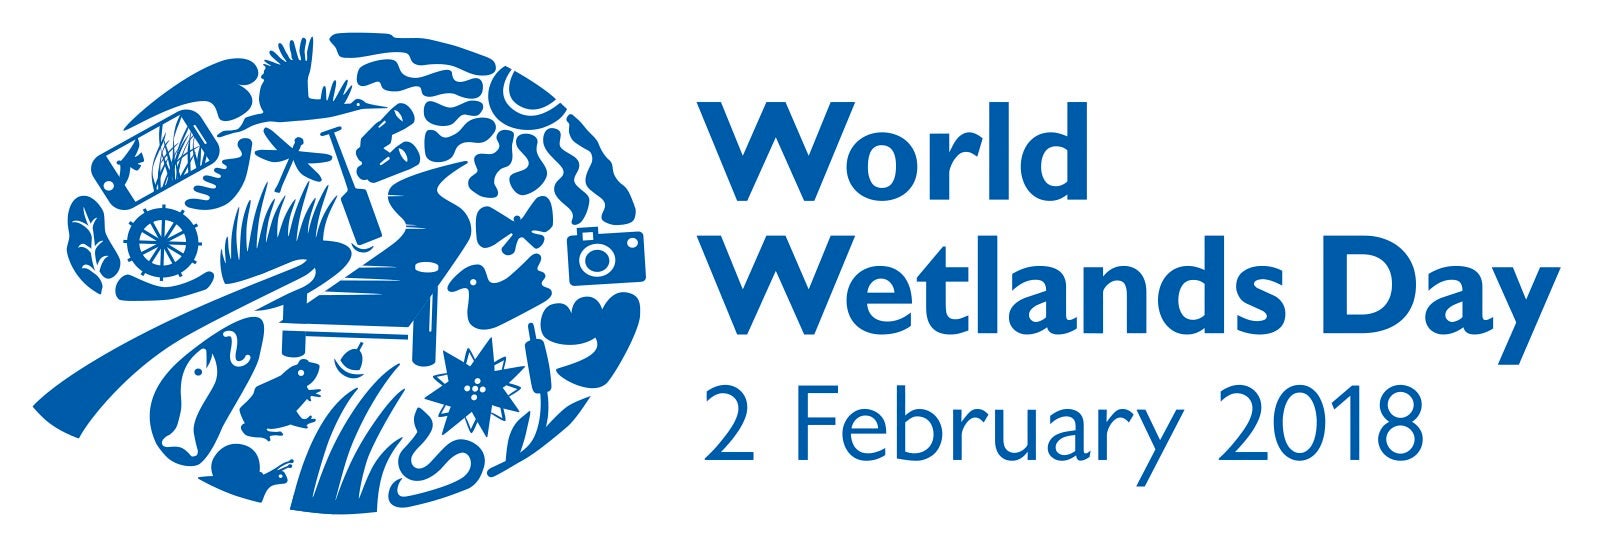 World Wetlands Day 2018 Logo